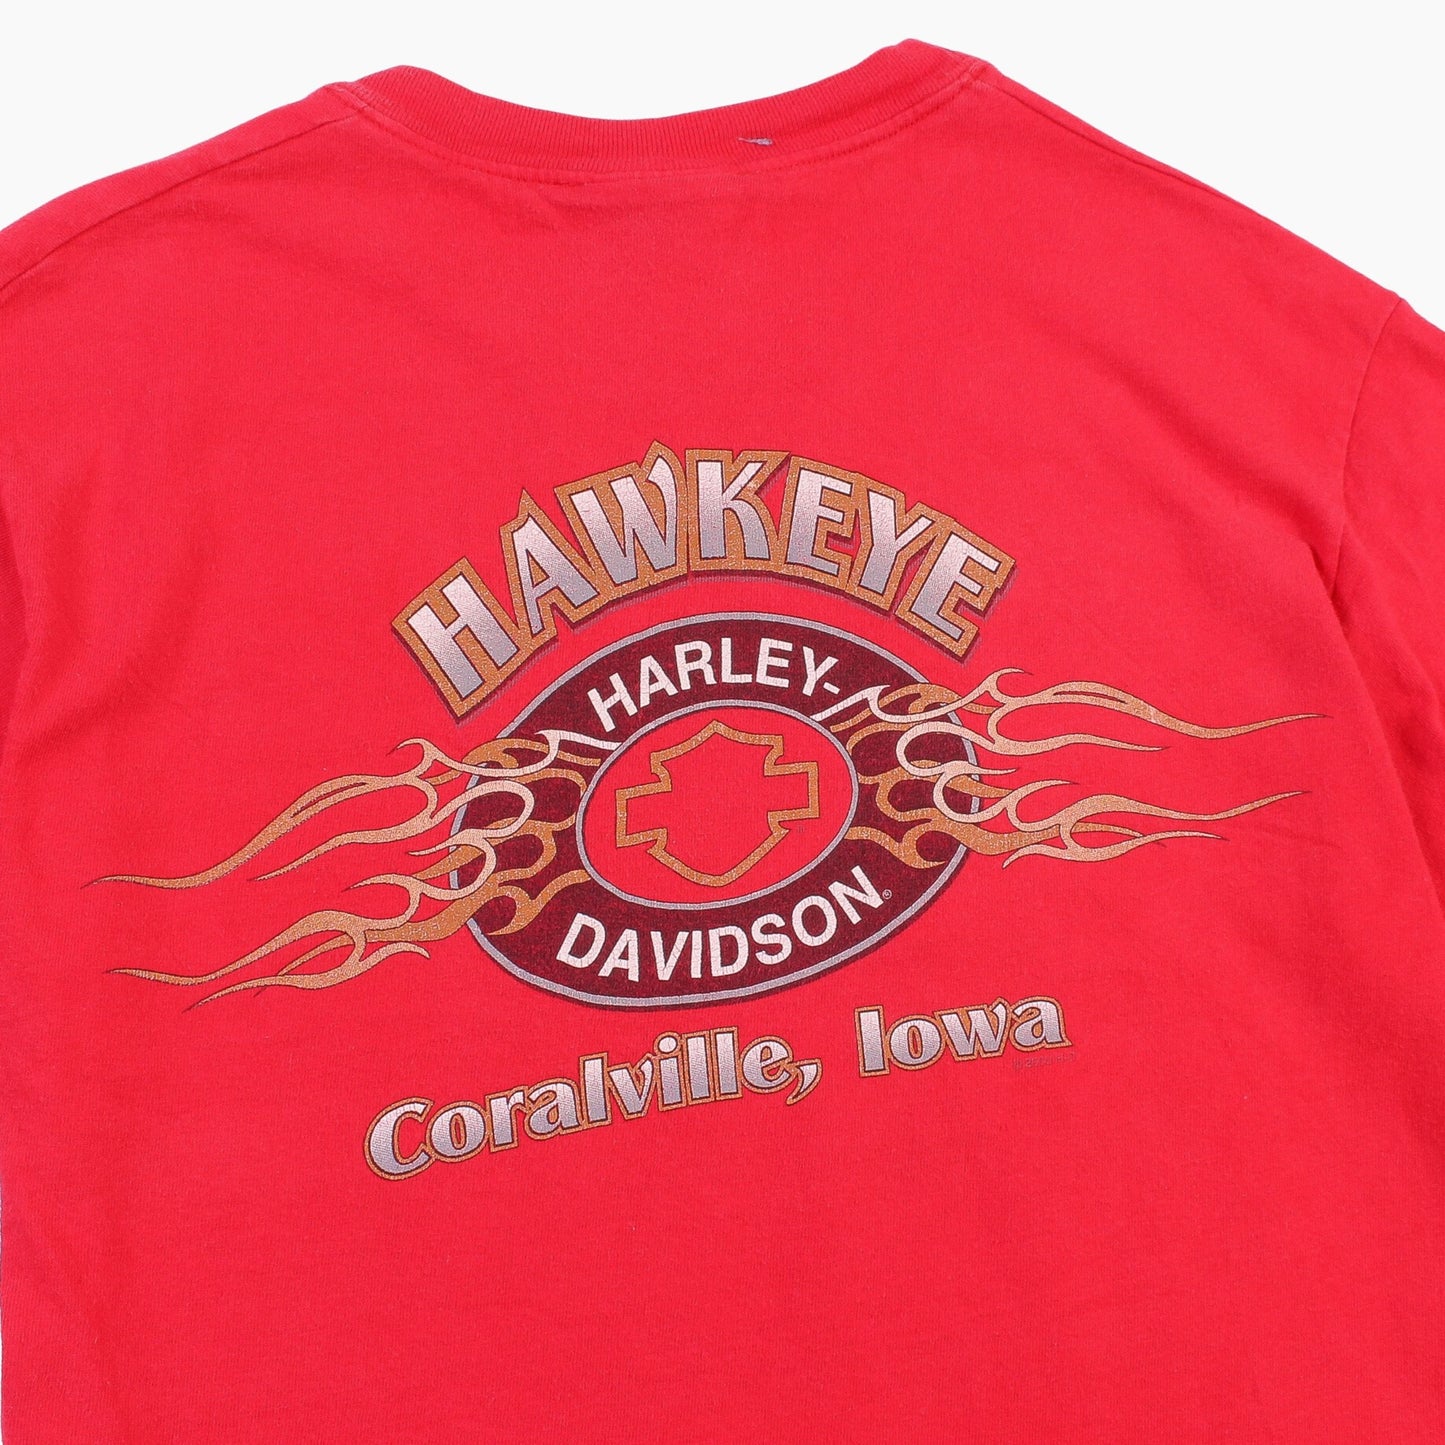 'Hawkeye' T-Shirt - American Madness